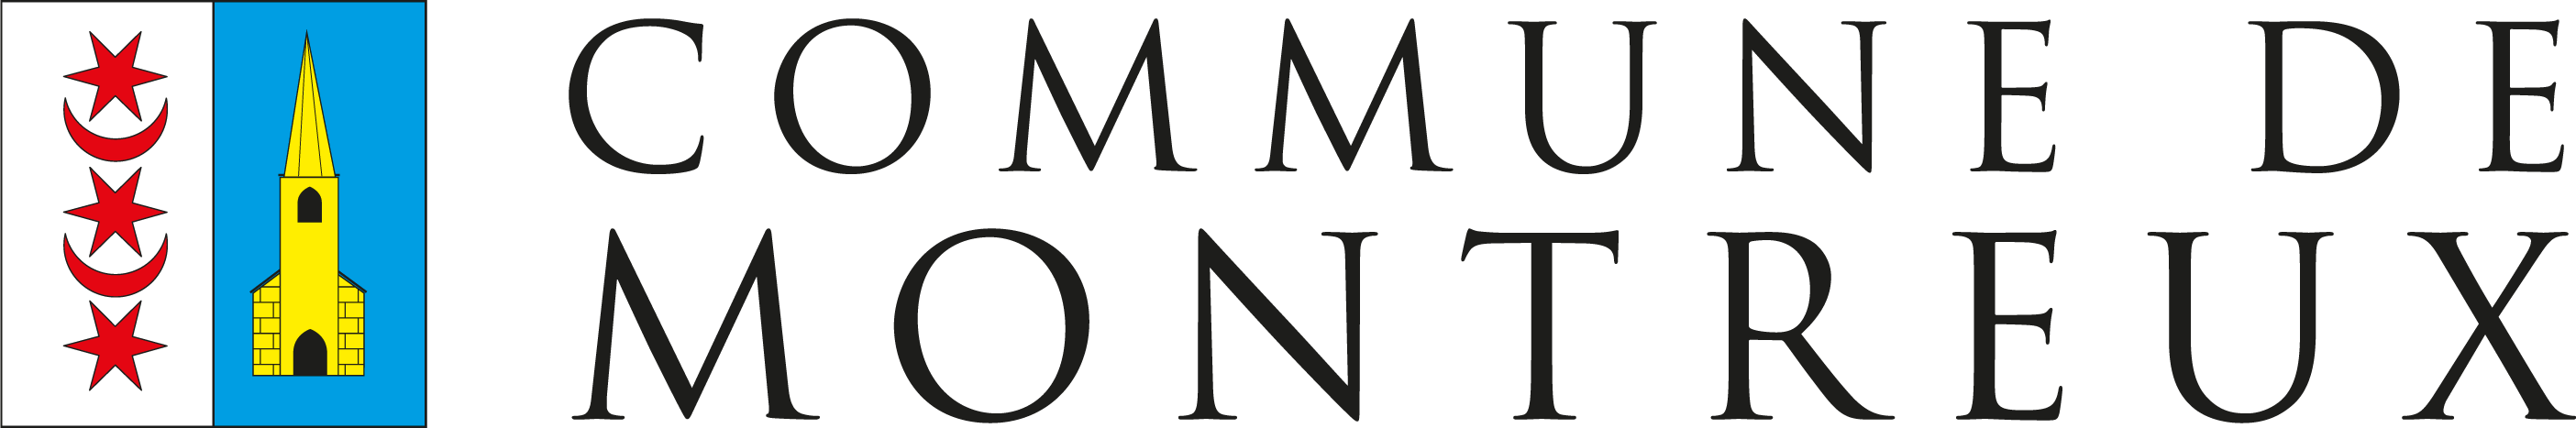 montreux logo horizontal texte noir 1